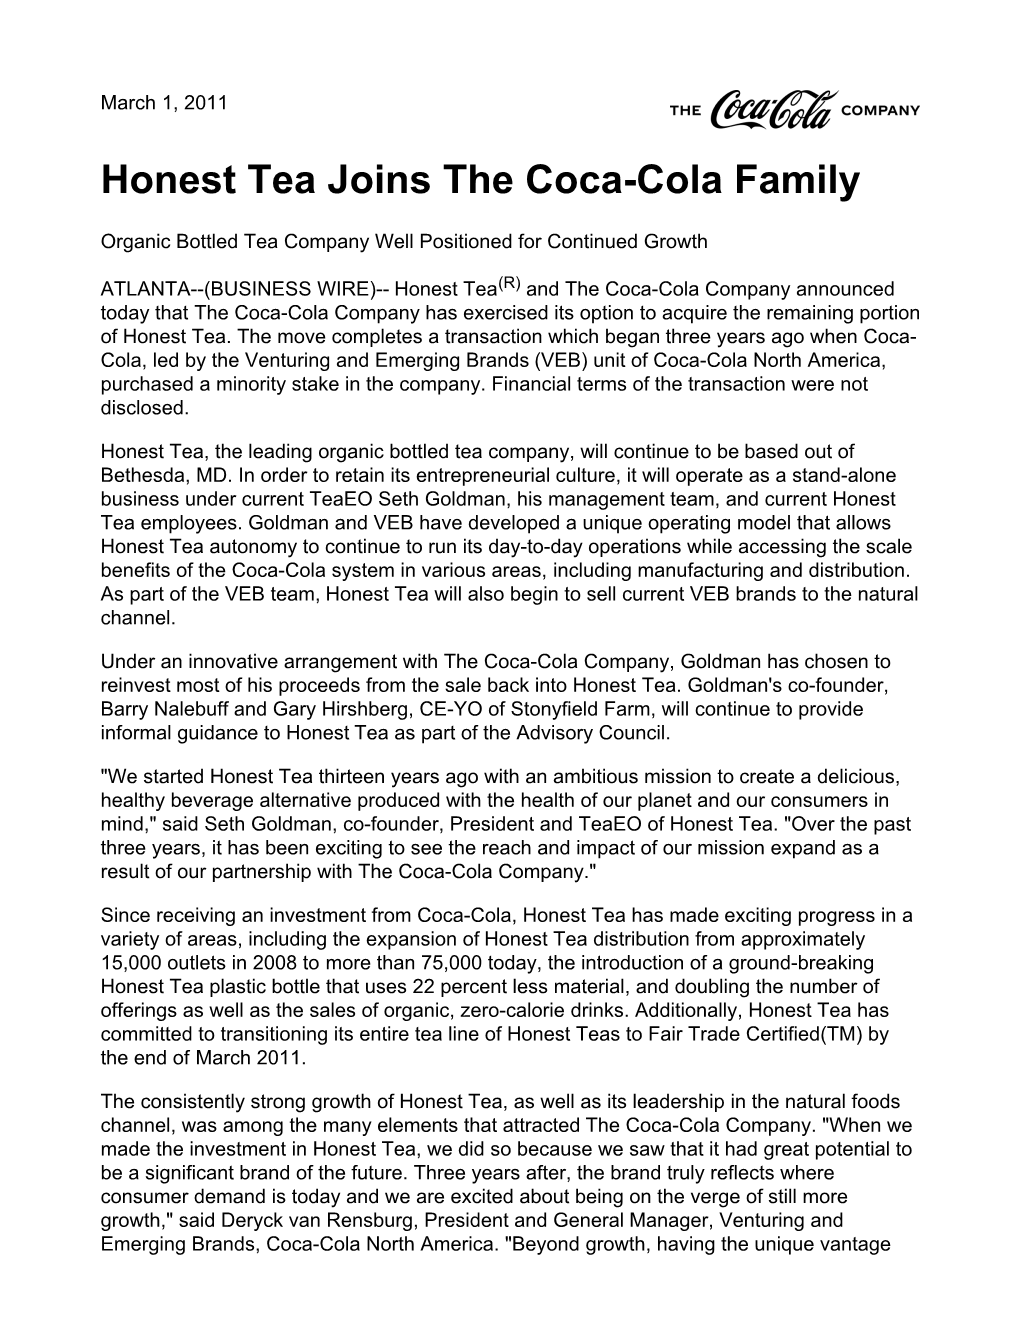 Honest Tea Joins the Coca-Cola Family